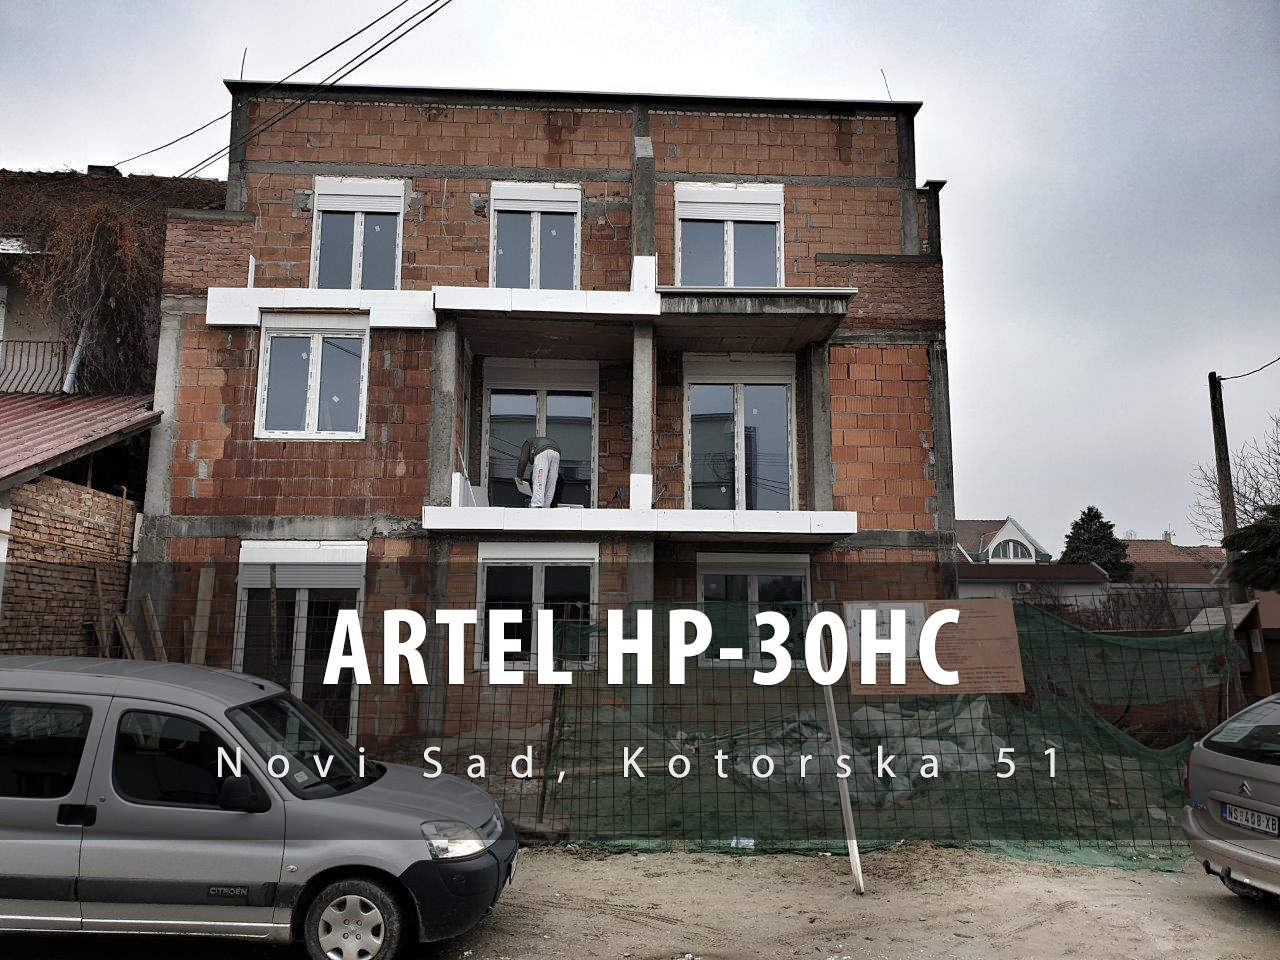 Novi-Sad-Kotoska-51-Artel-HP-30-HC